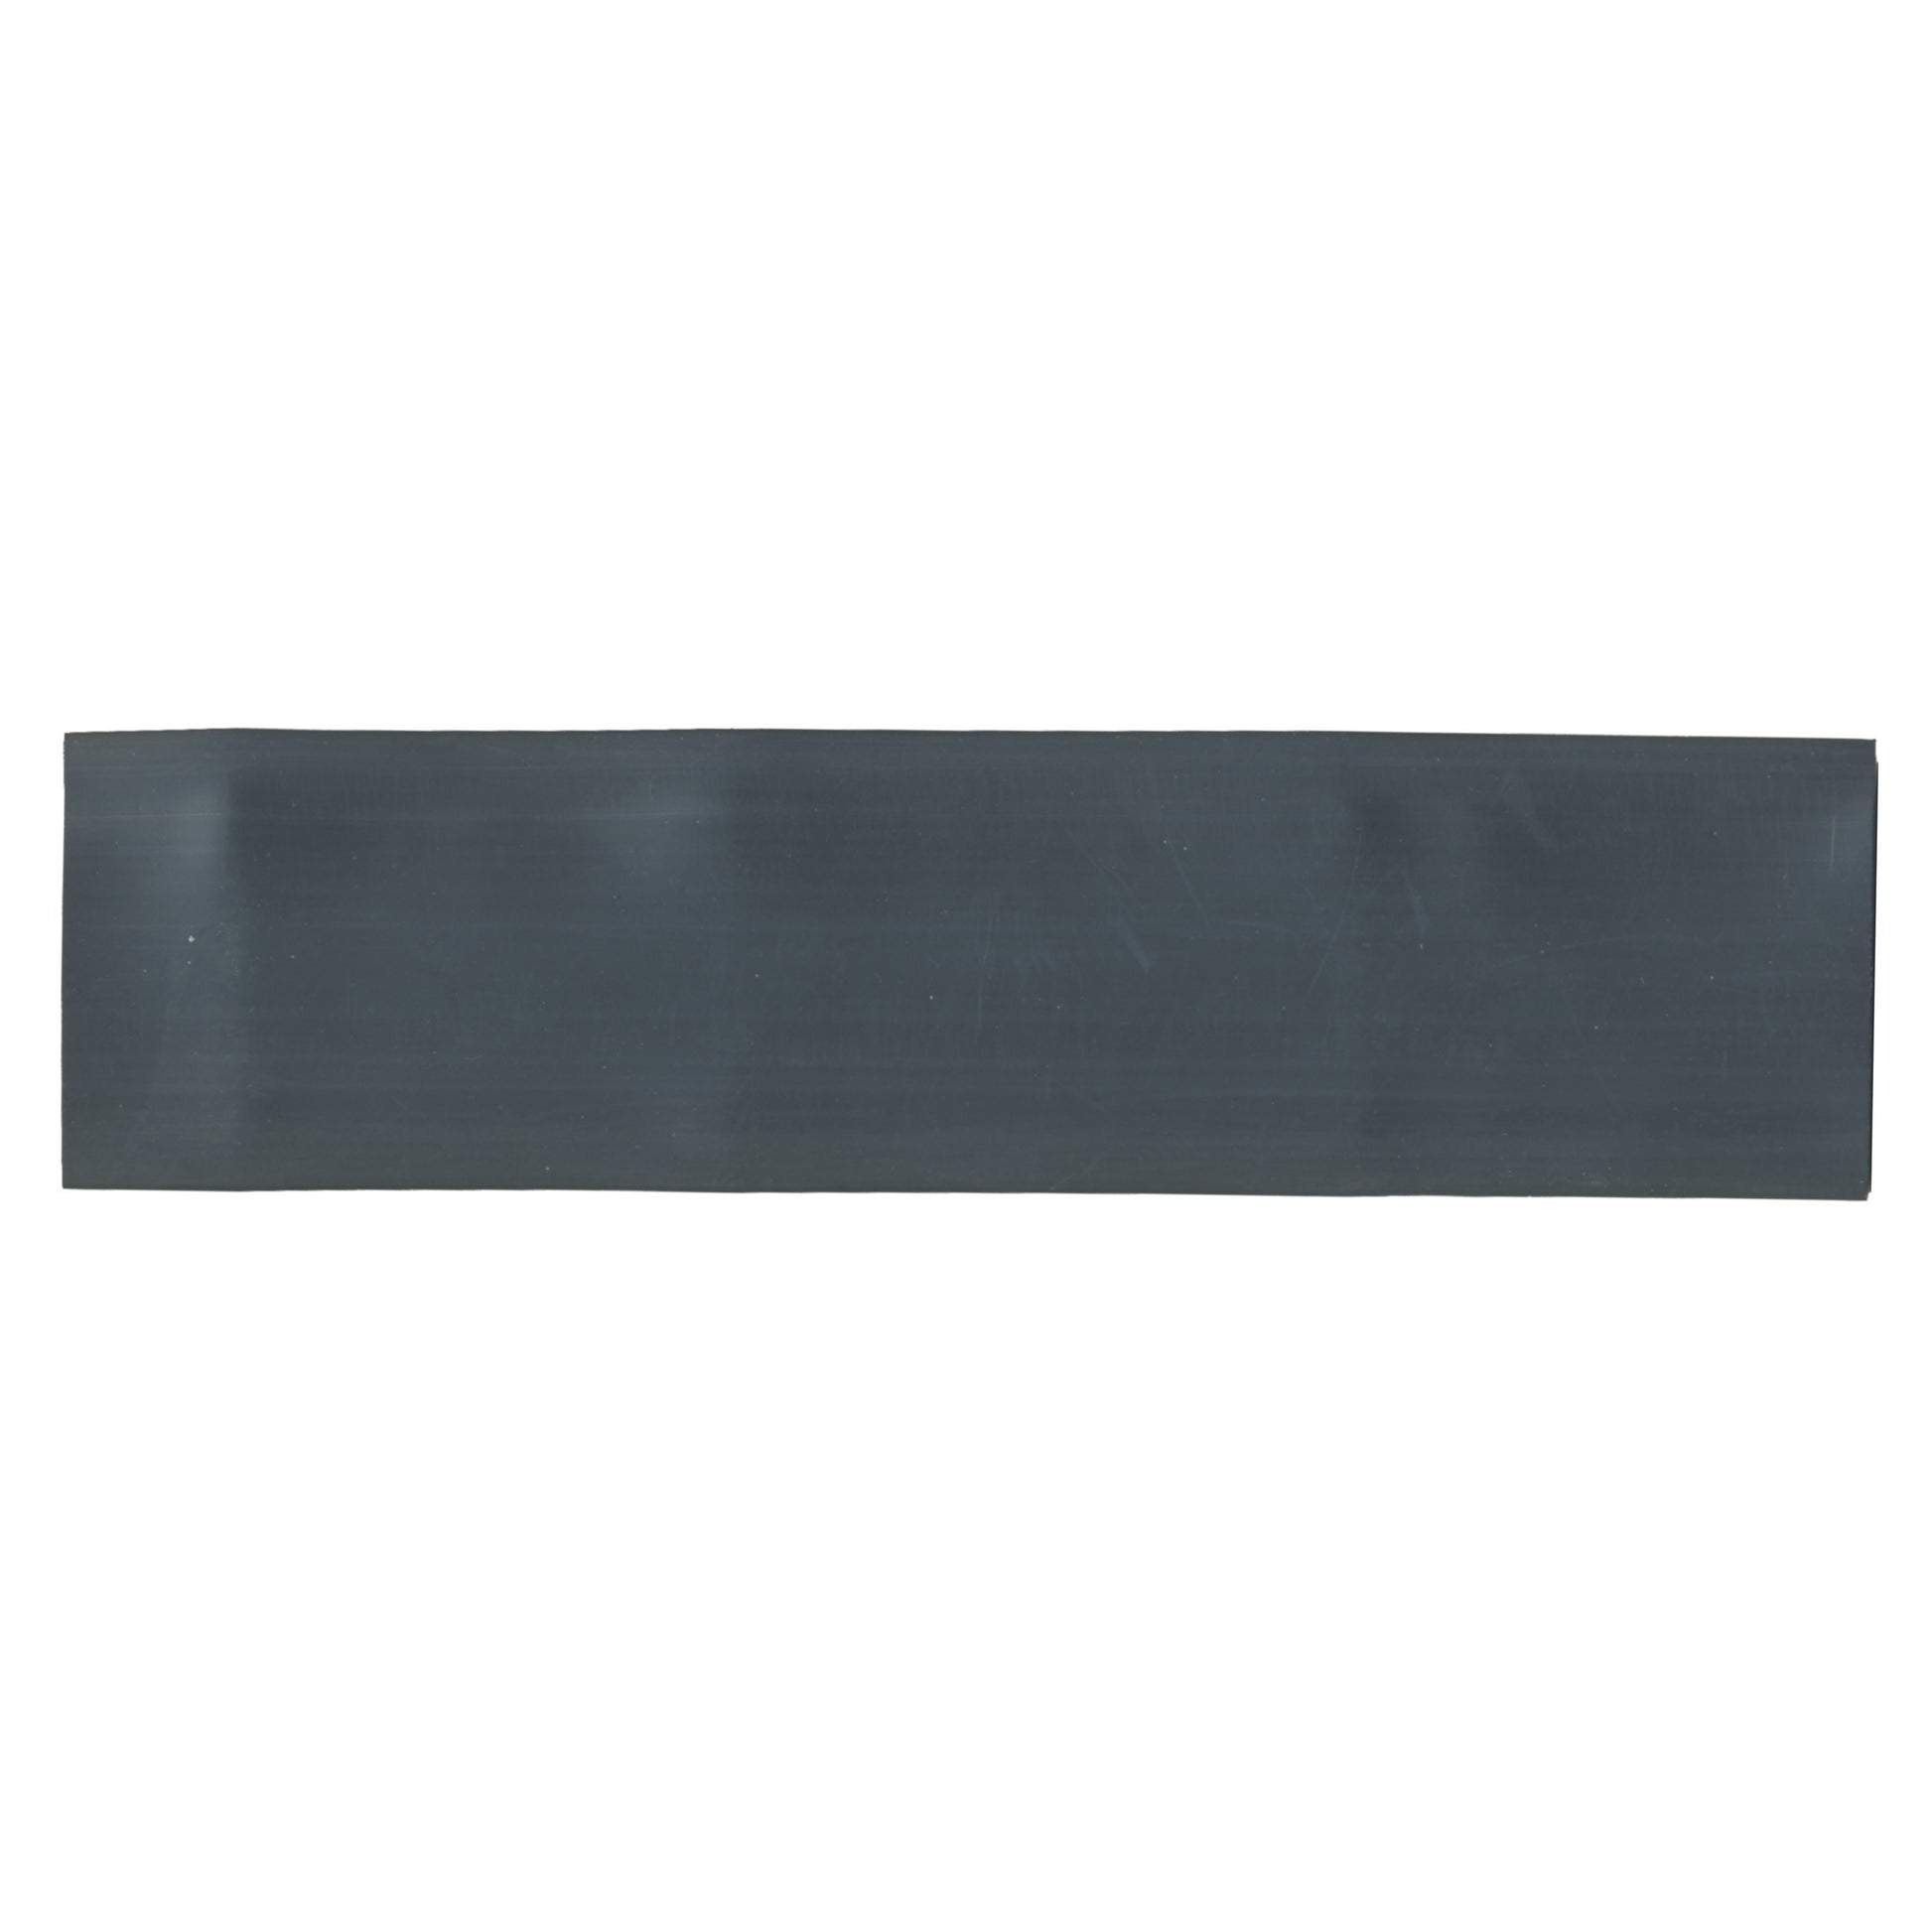 Flexible Thin Single Wall Non-Adhesive Heat Shrink Tubing 2:1 Black 1" ID - 25' Ft Spool